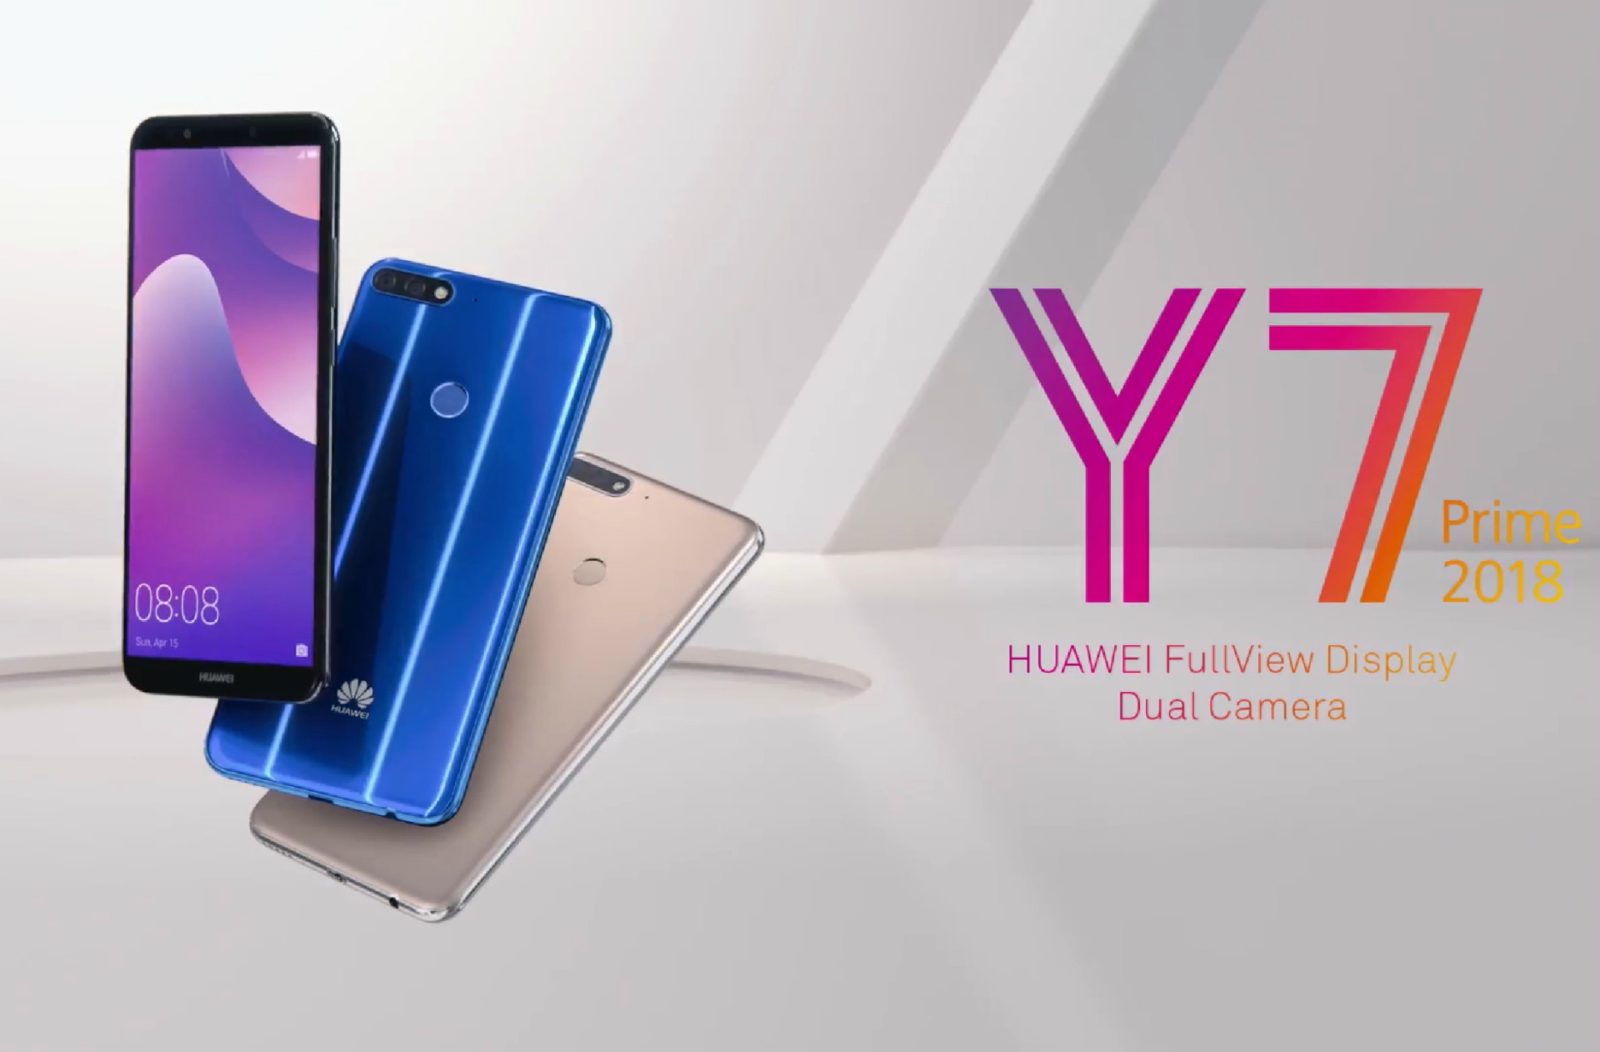 مزايا وعيوب هاتف Huawei Y7 Prime 2018 الذي كشف عنه على هامش مؤتمر P20